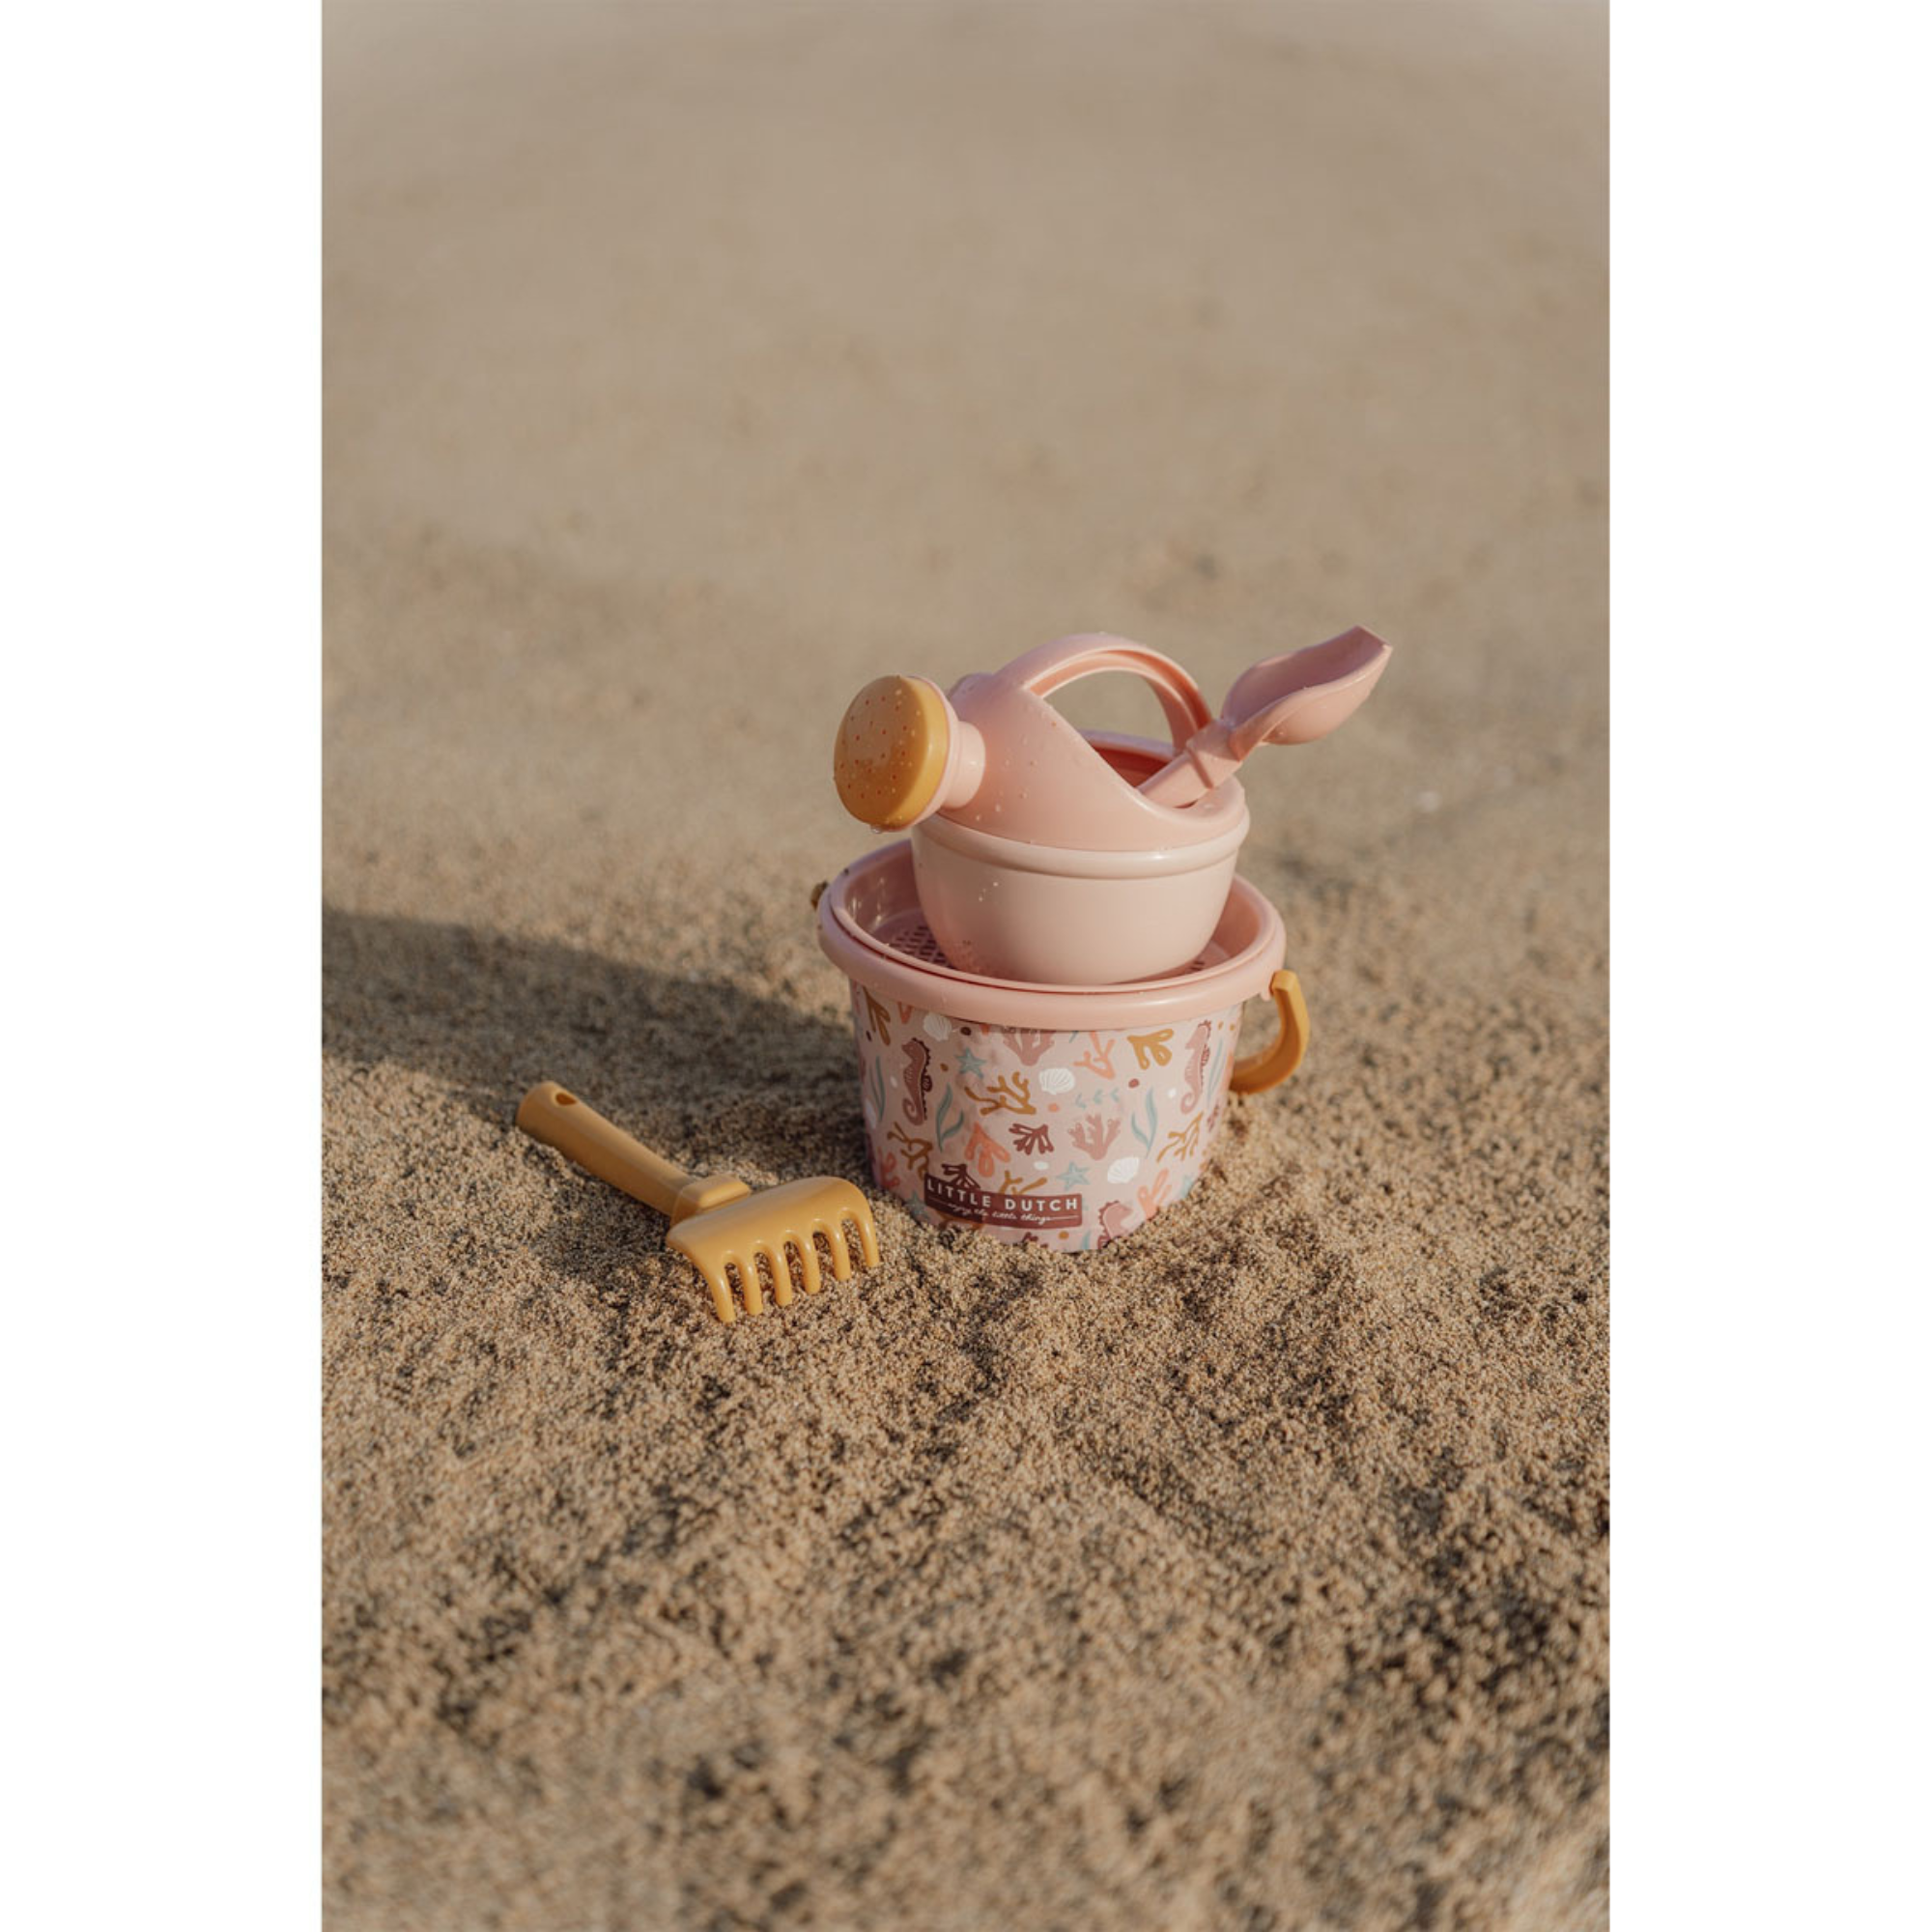 Sand toys - Ocean dreams pink 